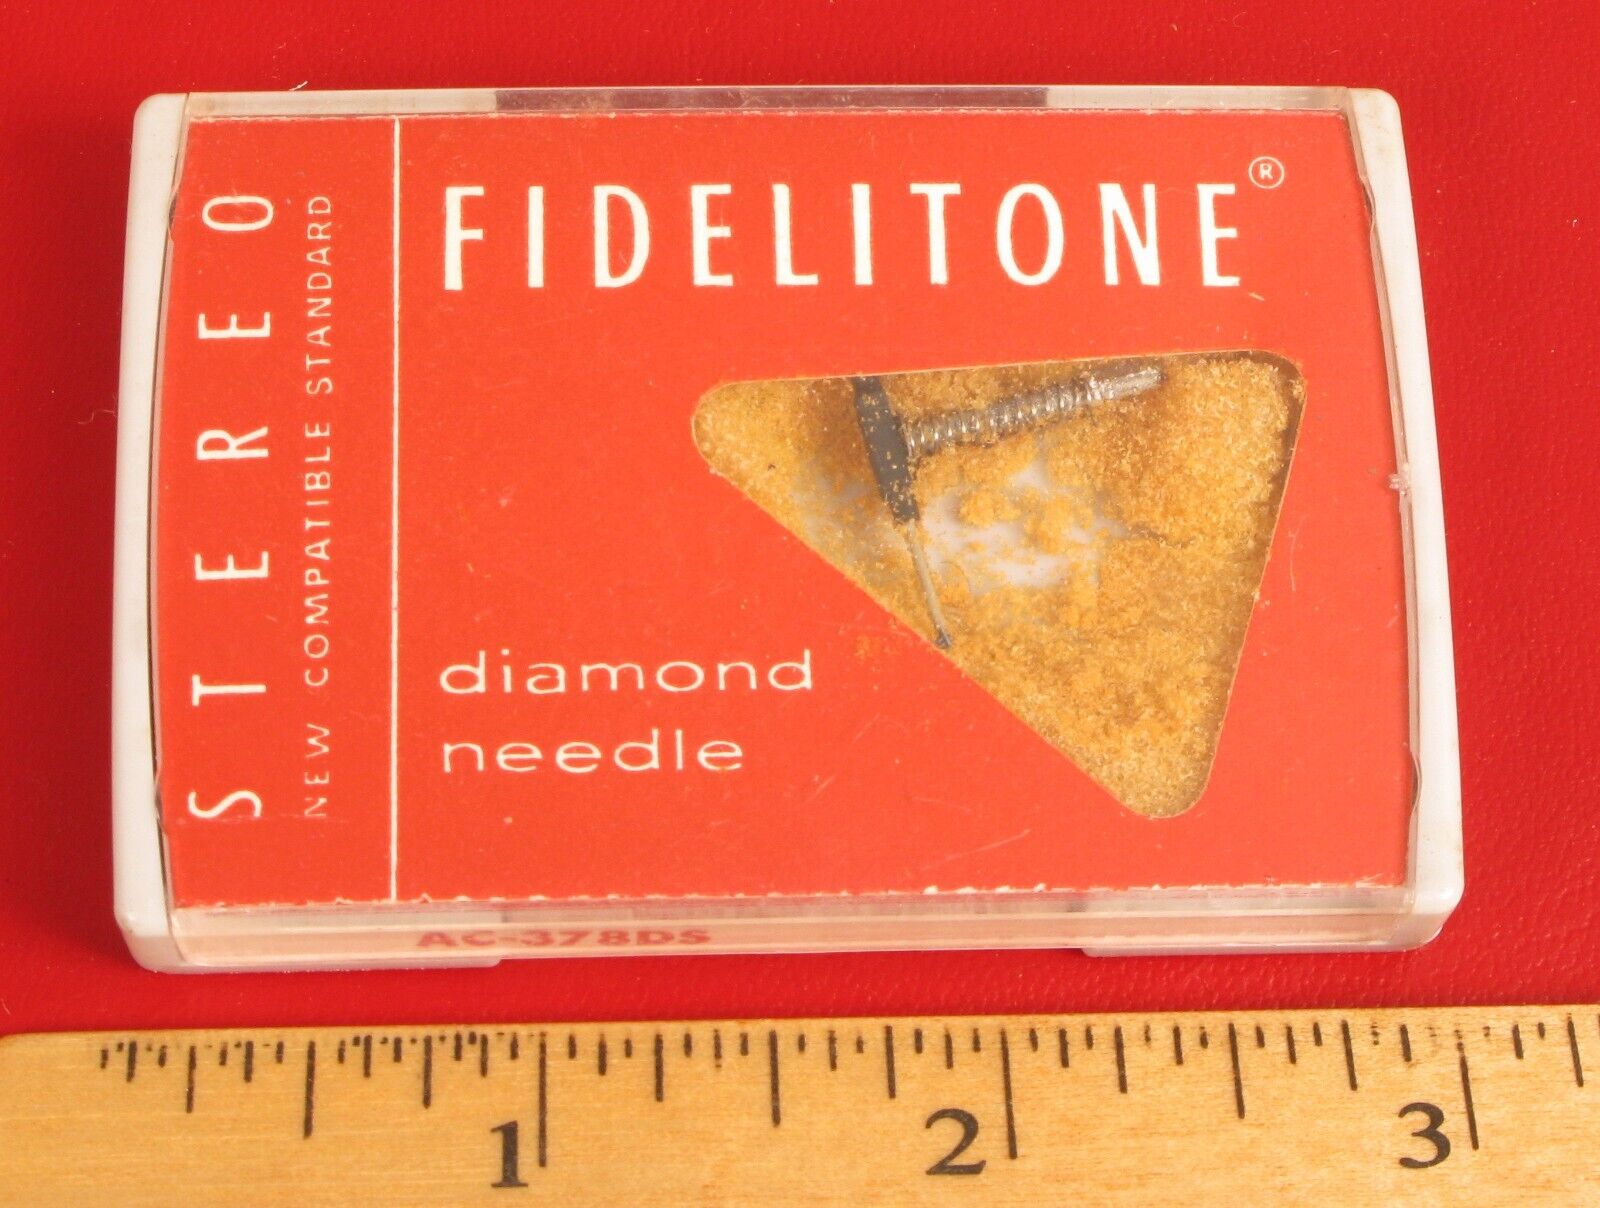 VINTAGE STEREO RECORD PLAYER VINYL LP FIDELITONE DIAMOND NEEDLE AC-378DS ZENITH